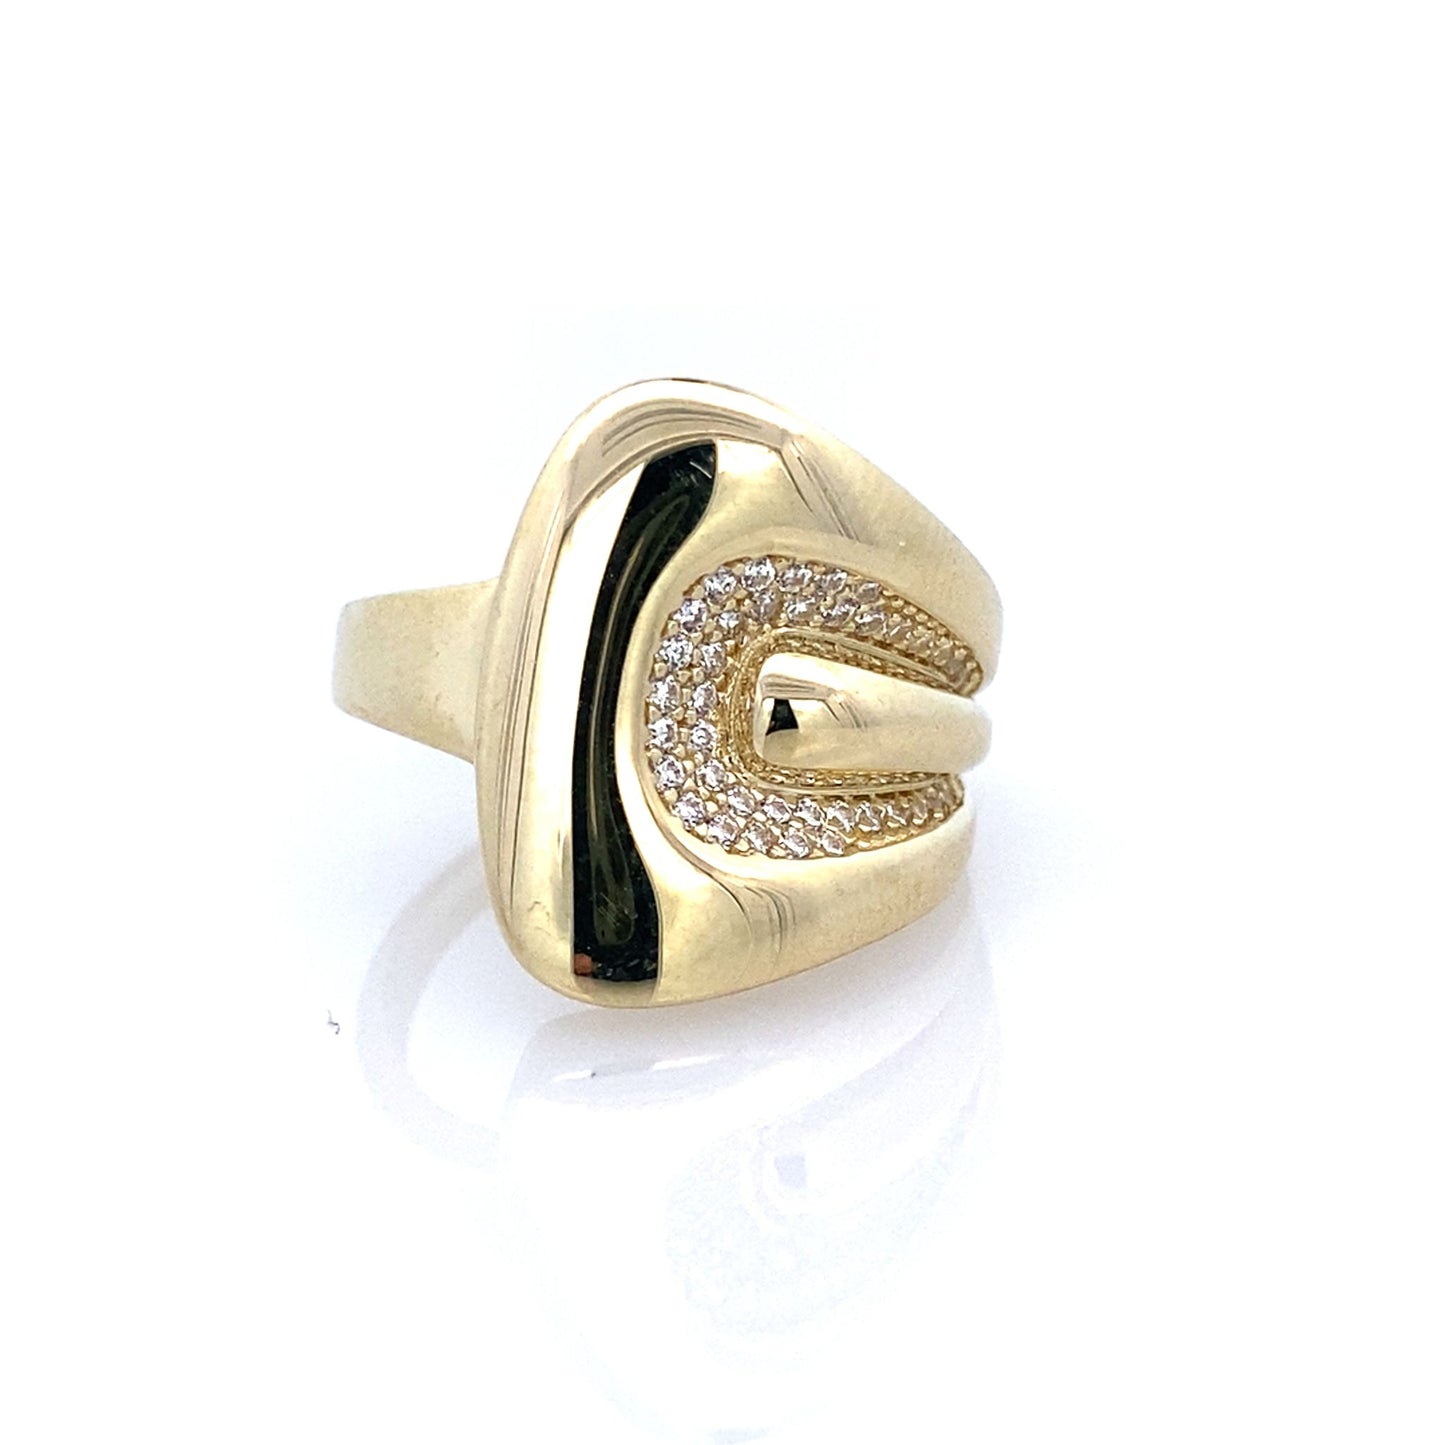 10K Yellow Gold Ladies Cz Fashion Ring Size 7.5